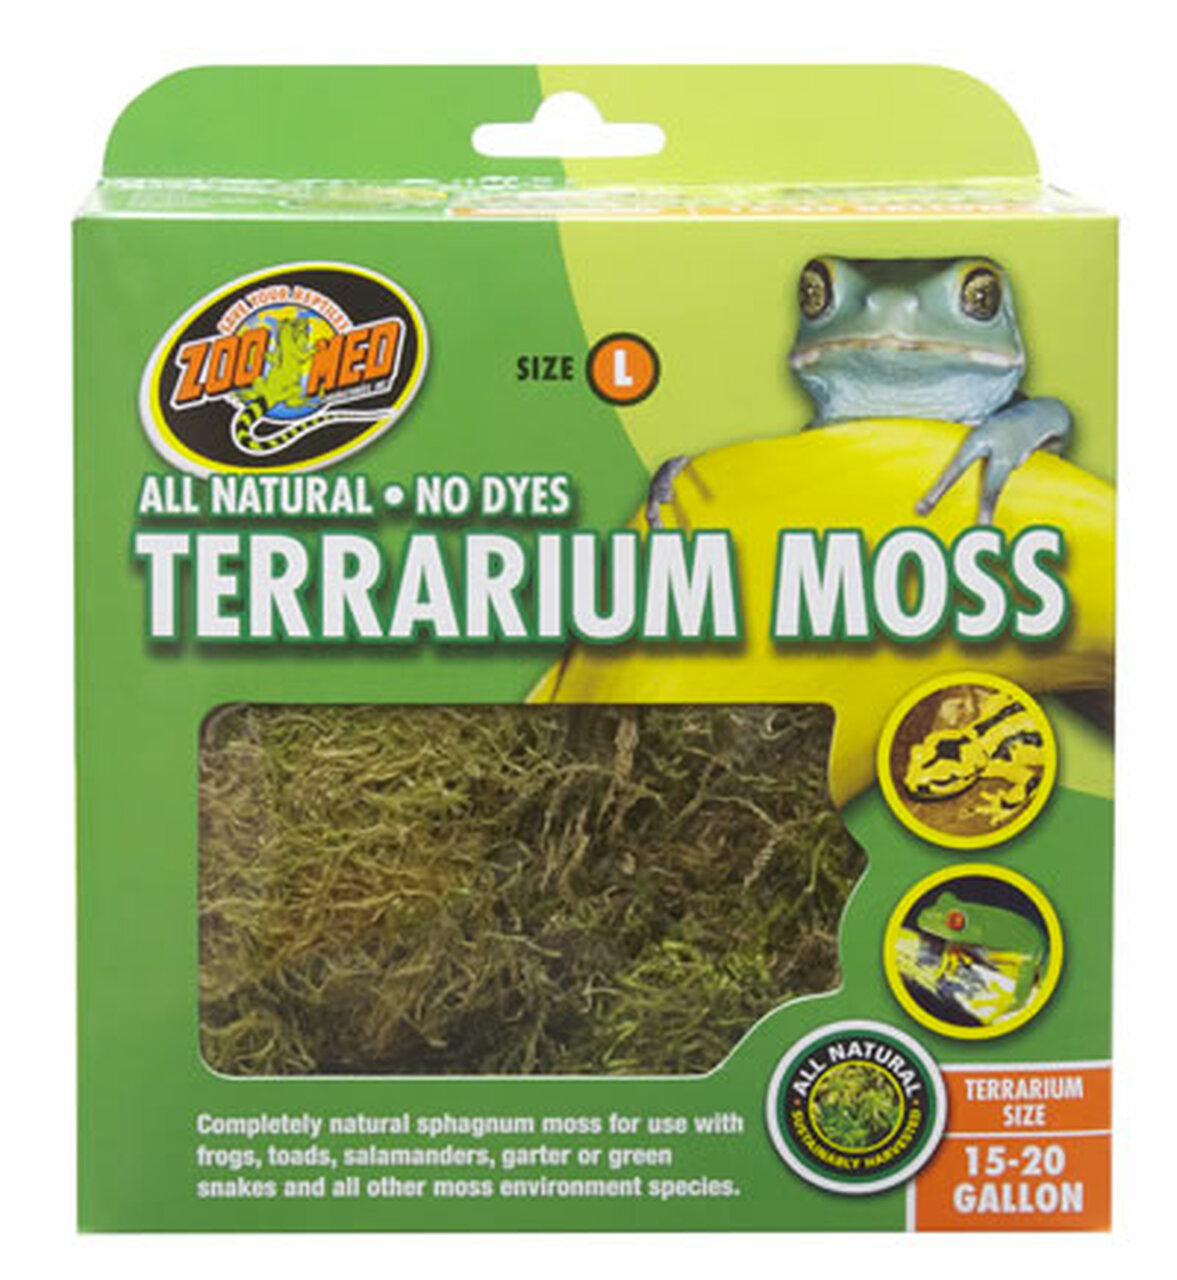 ZooMed Terrarium Moss Musgo para terrarios